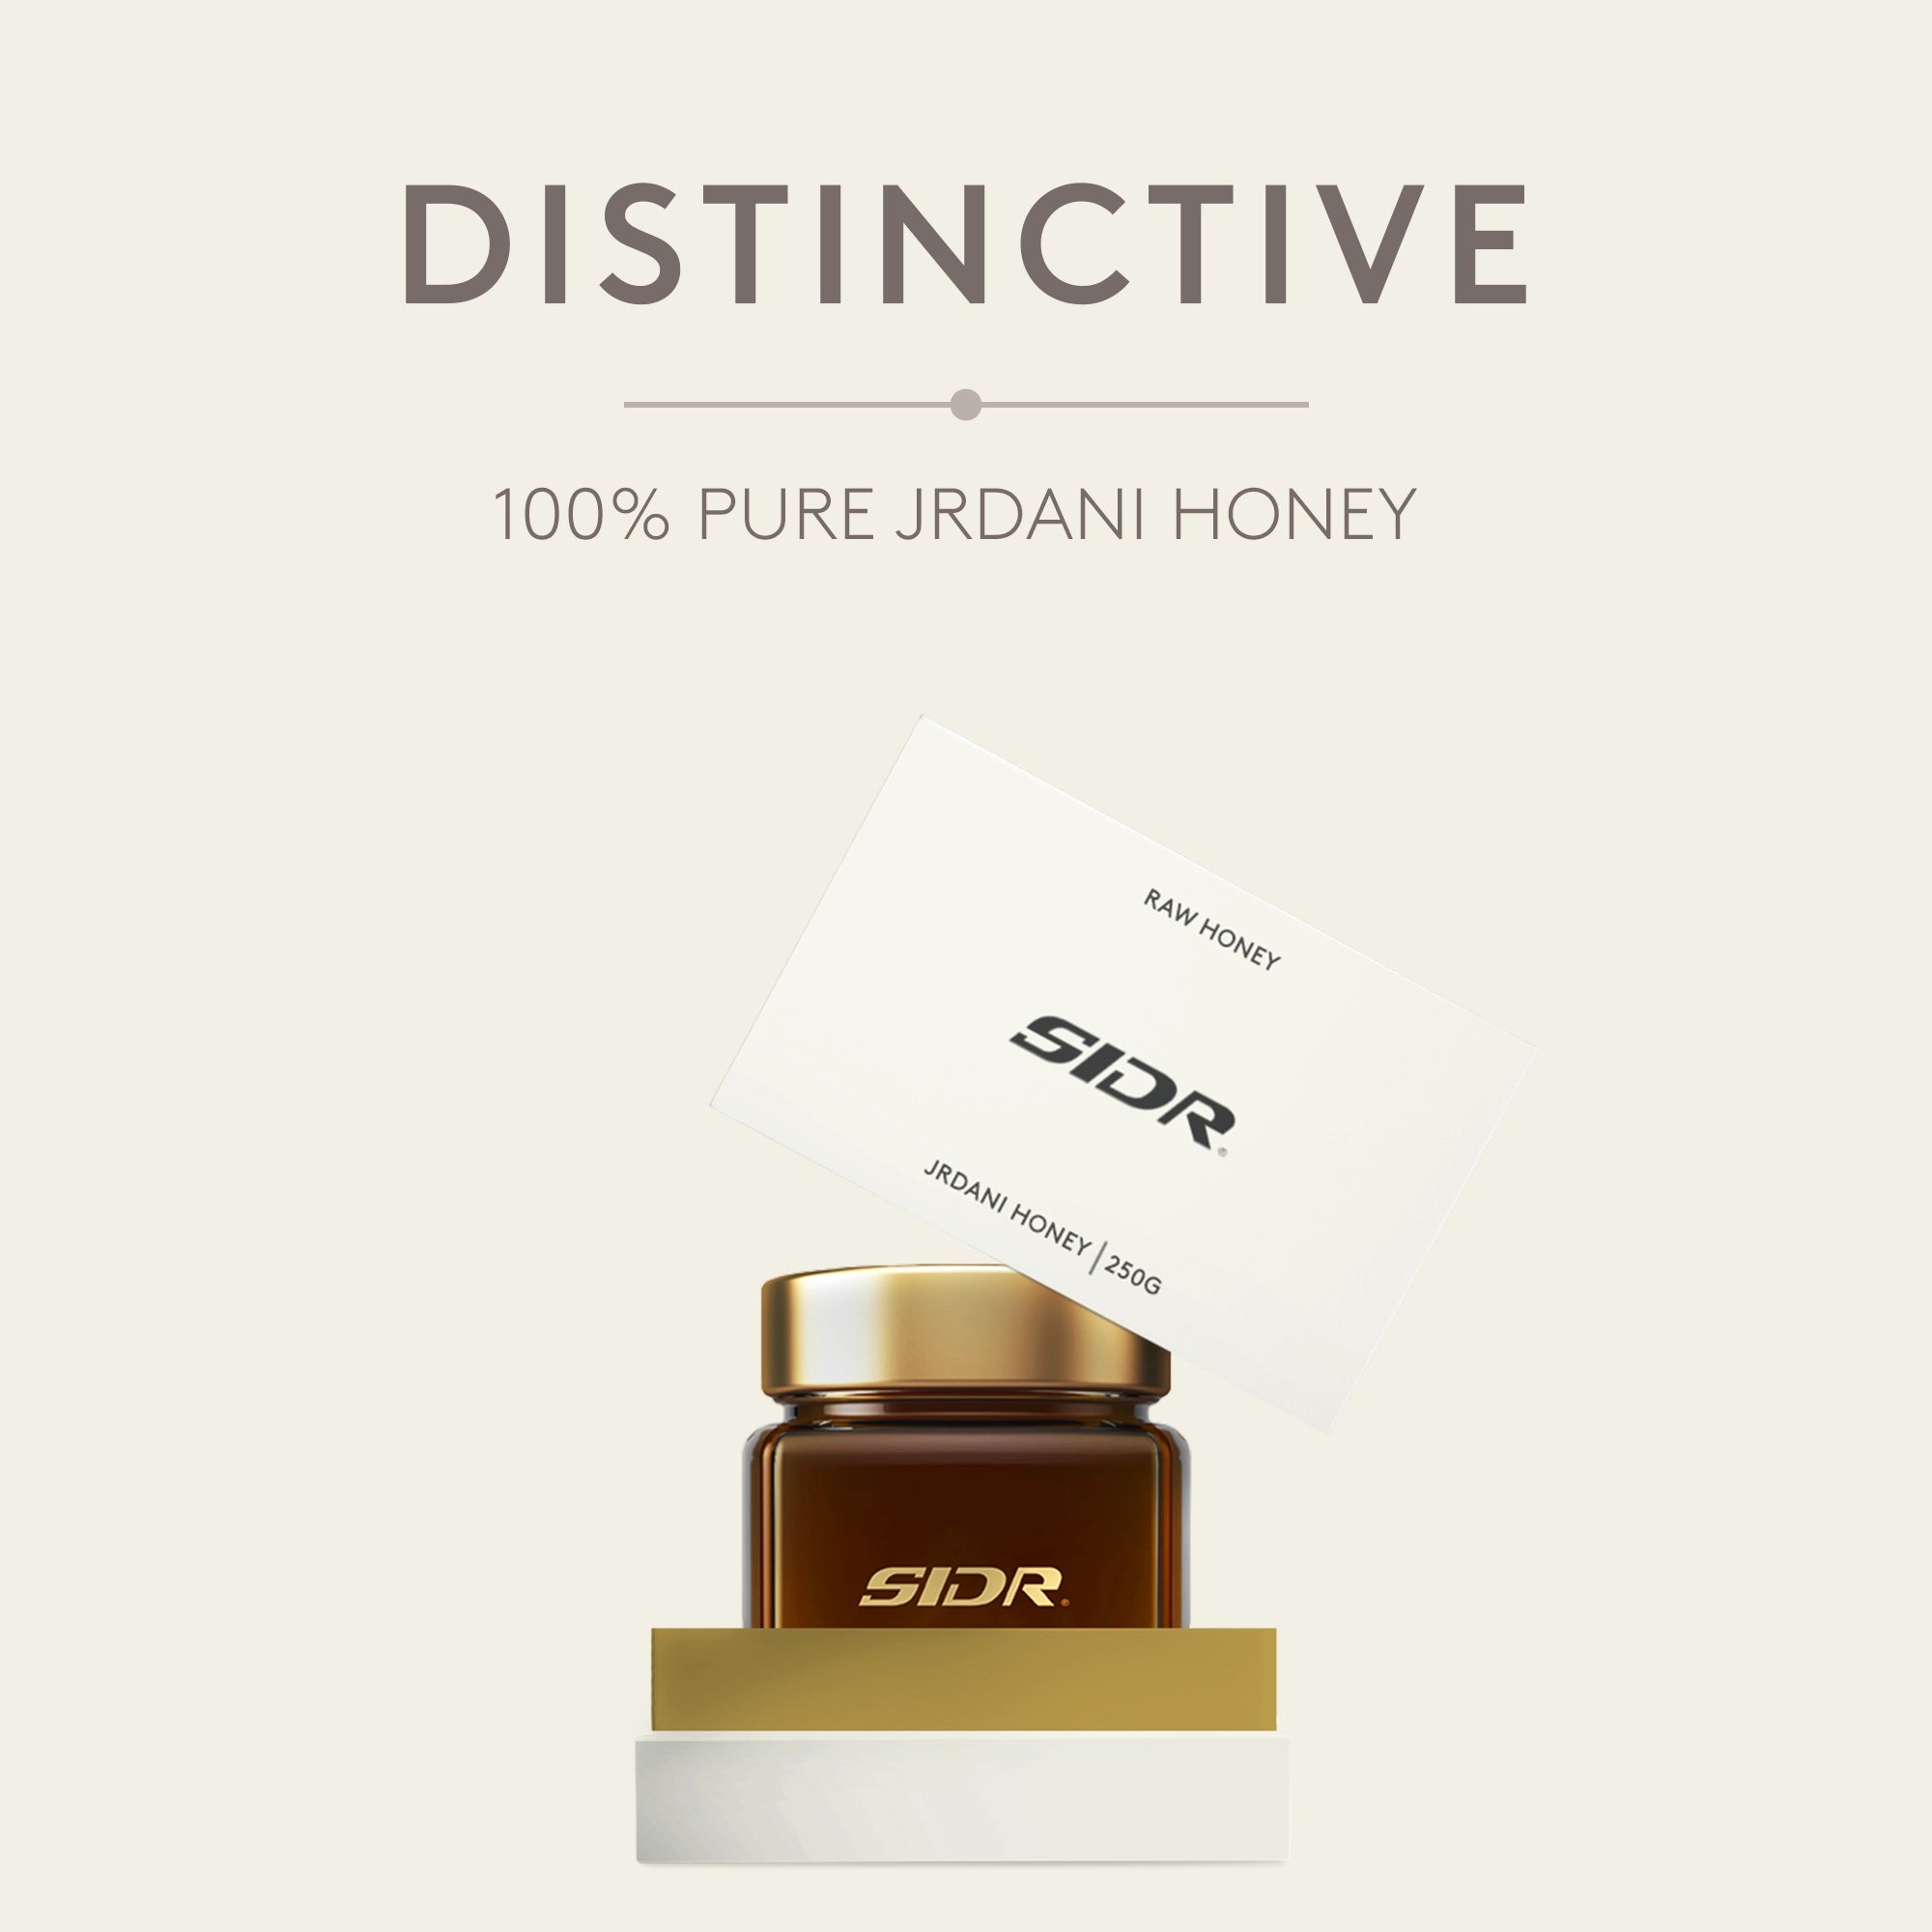 sidr jrdani honey distinctive